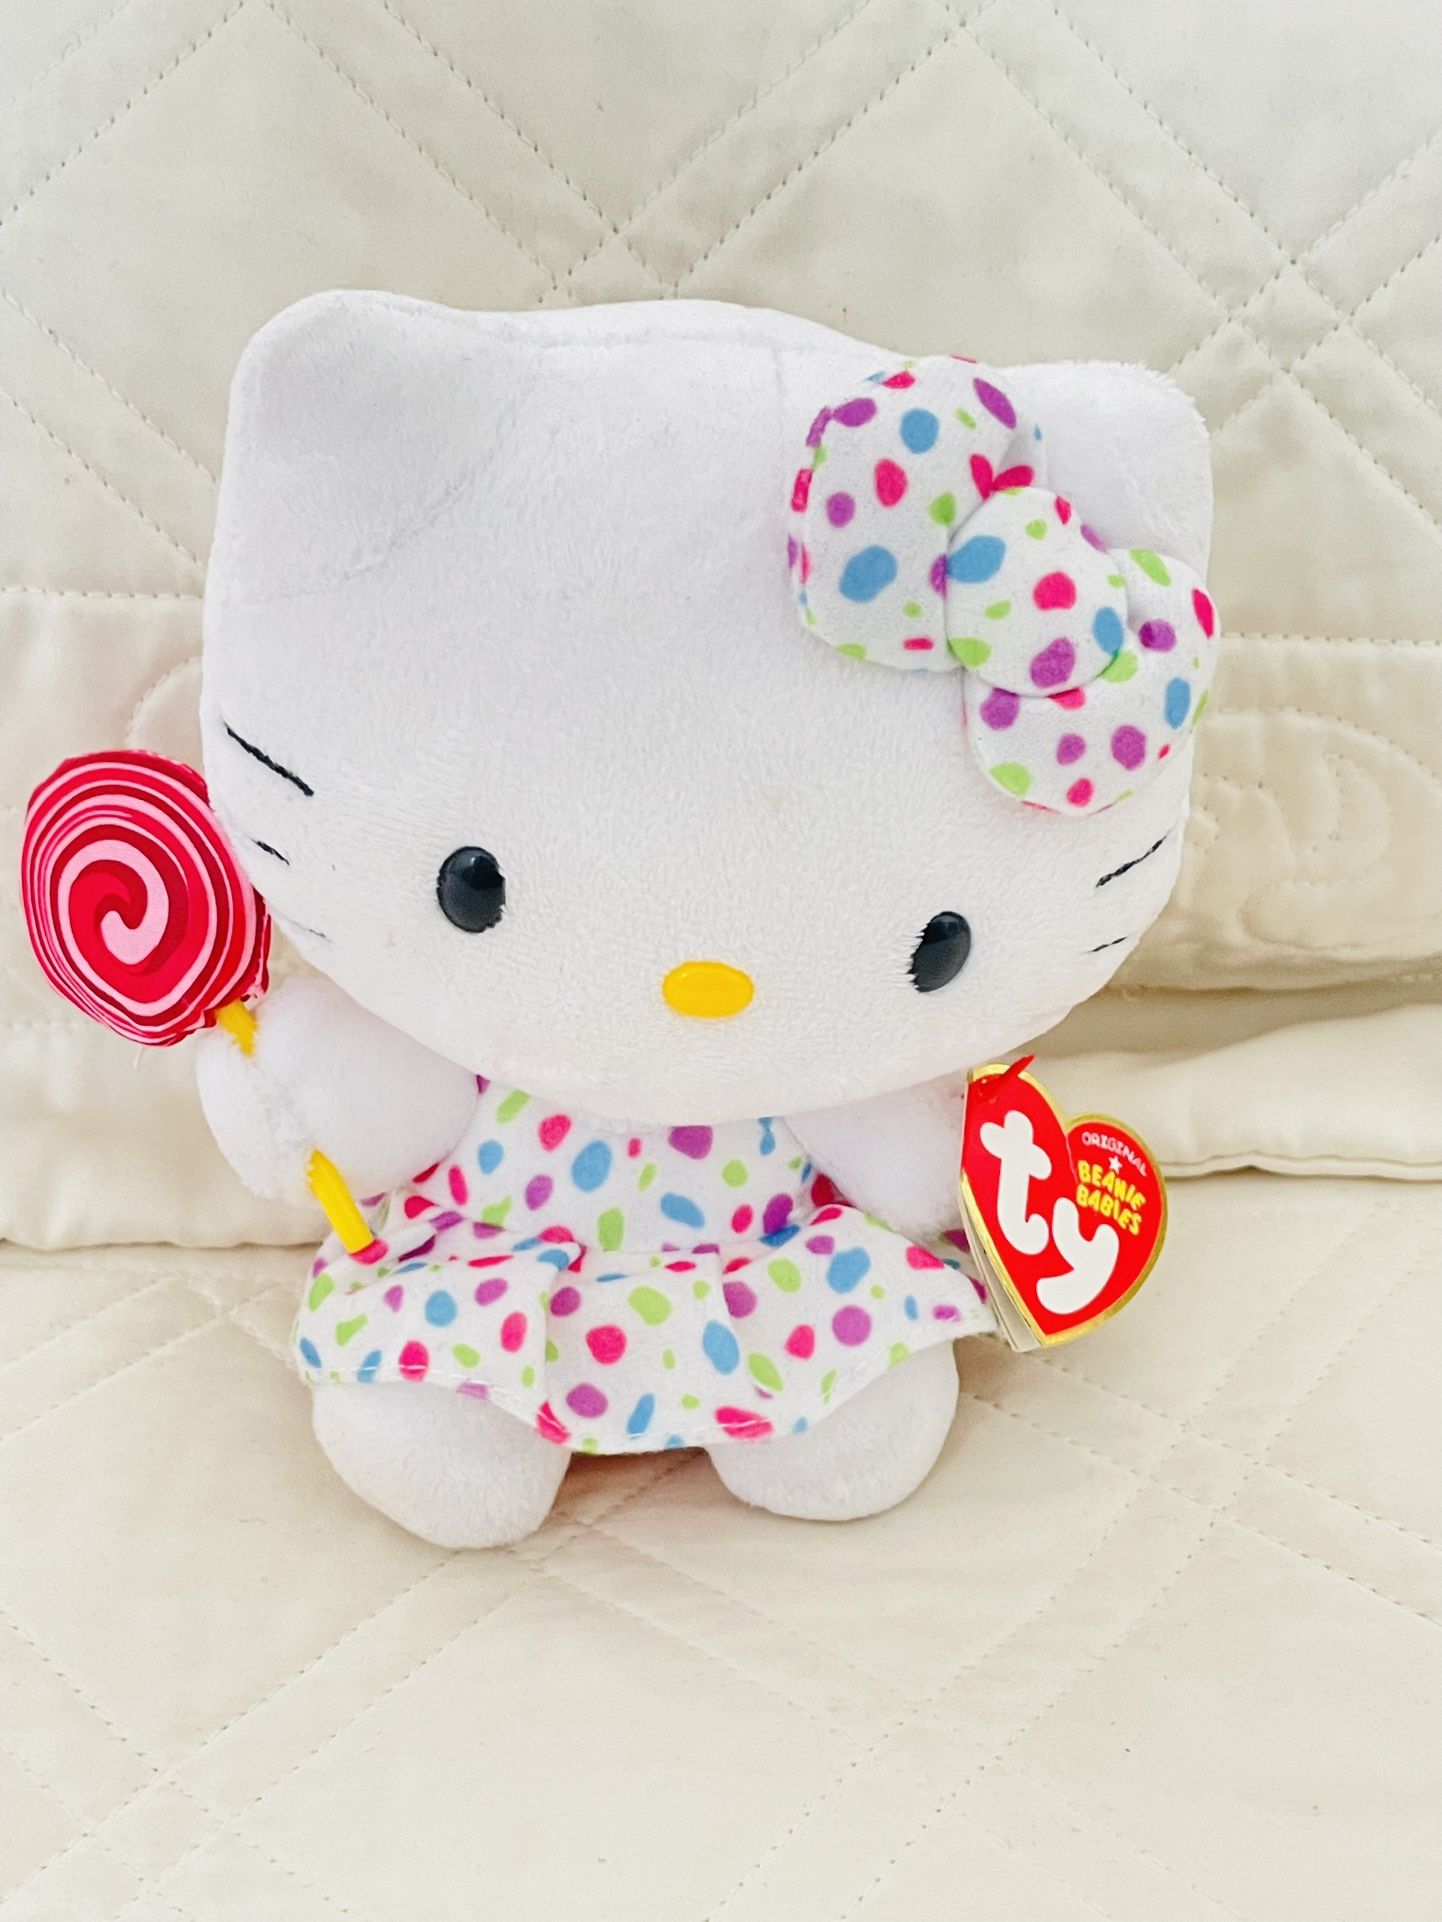 Candy Hello Kitty Plushie 